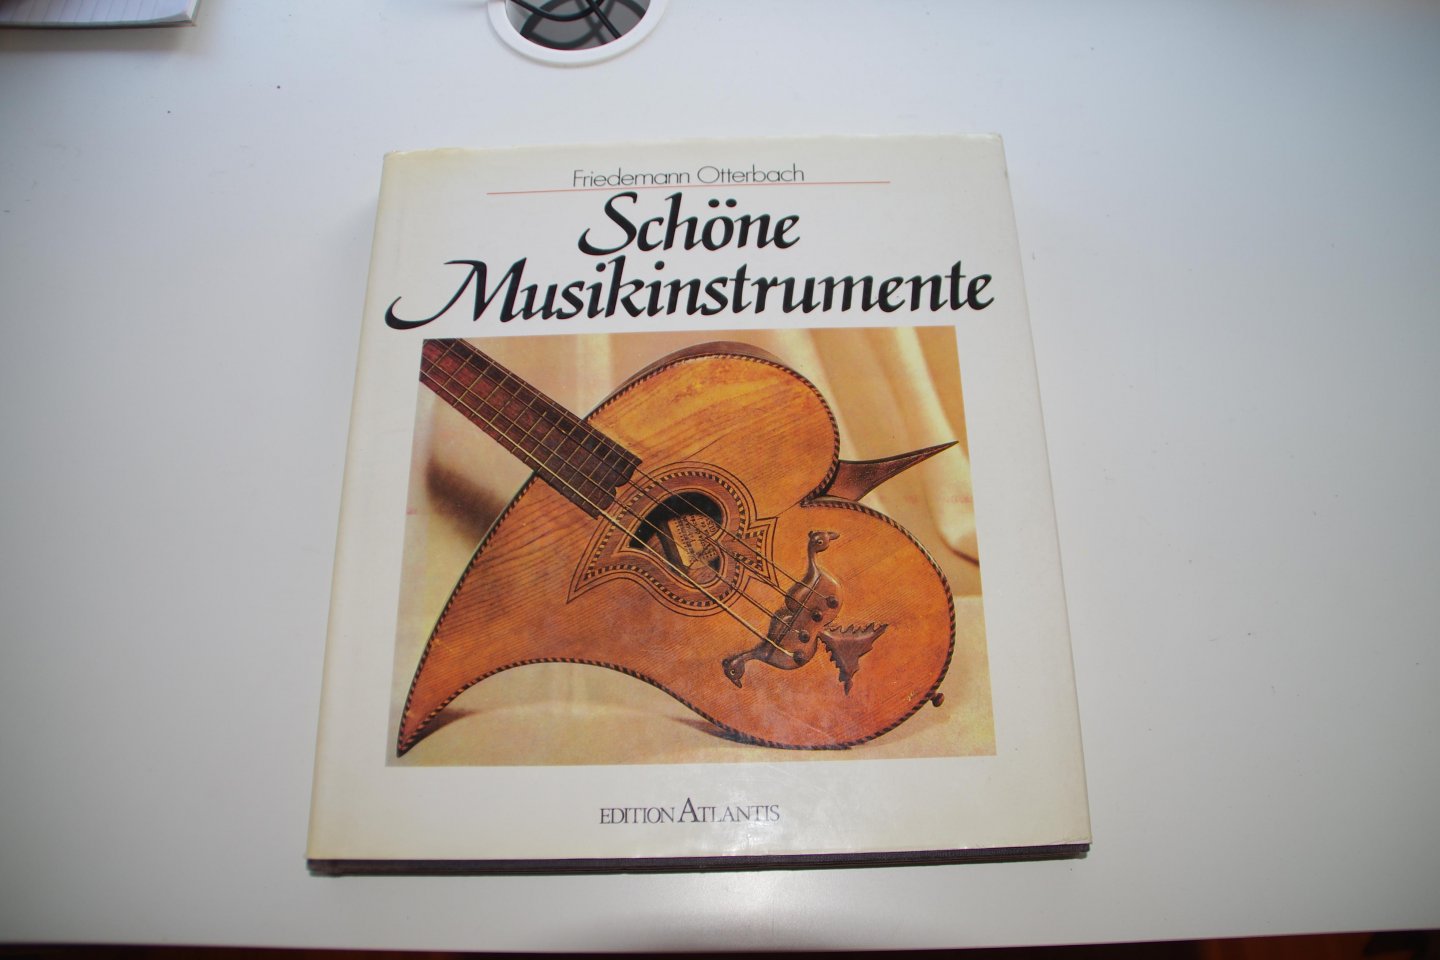 Friedemann otterbach - Schone Musikinstrumente